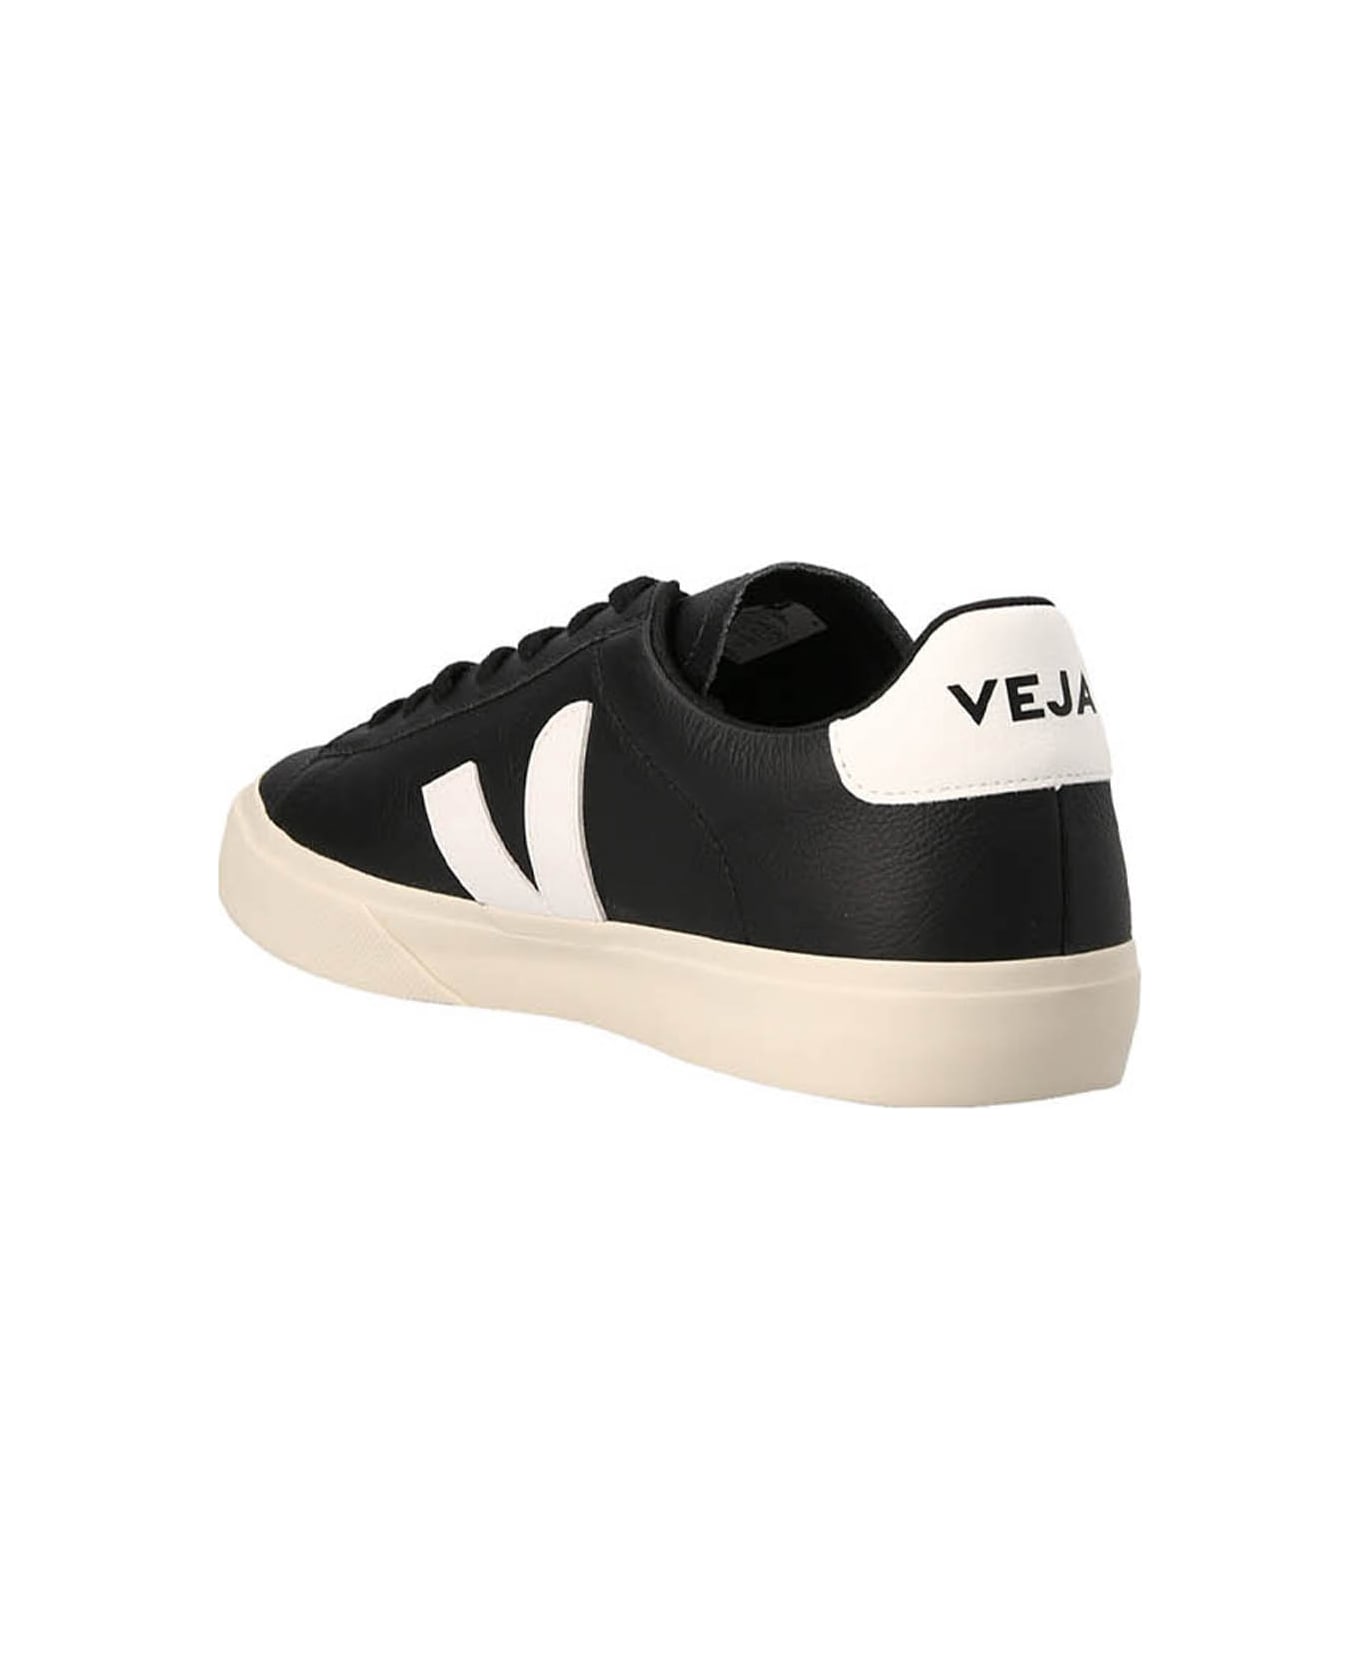 Veja 'campo' Sneakers - White/Black スニーカー